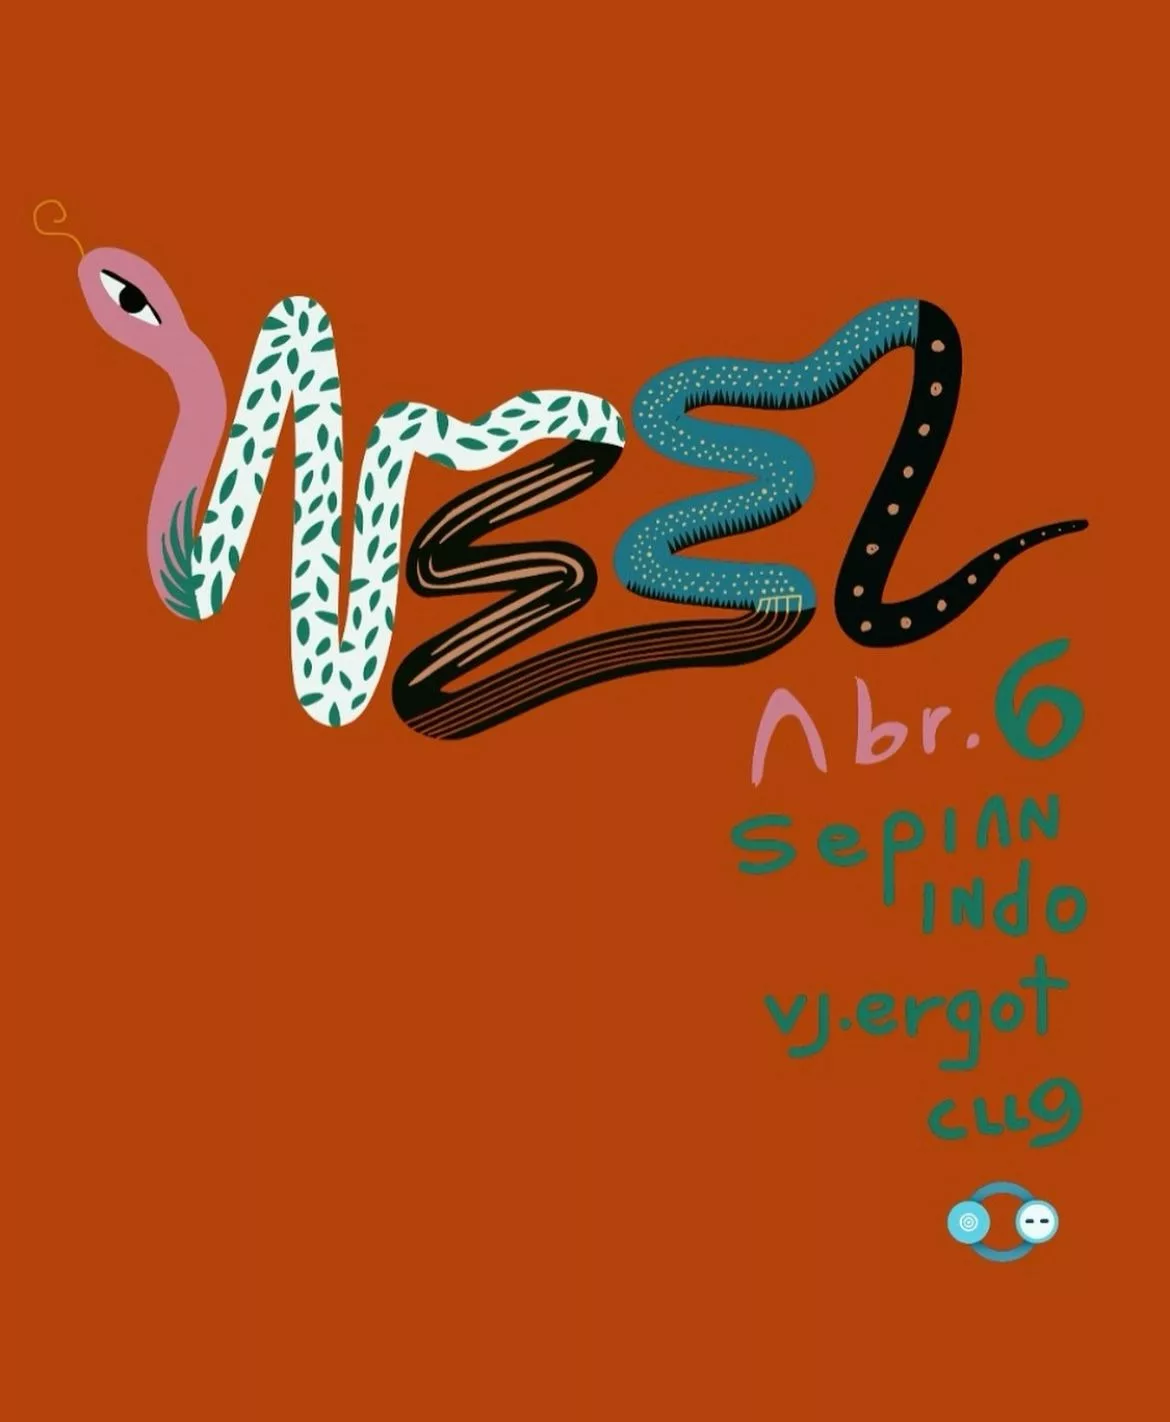 5 releases de Sepian próximamente Junto a NEEL